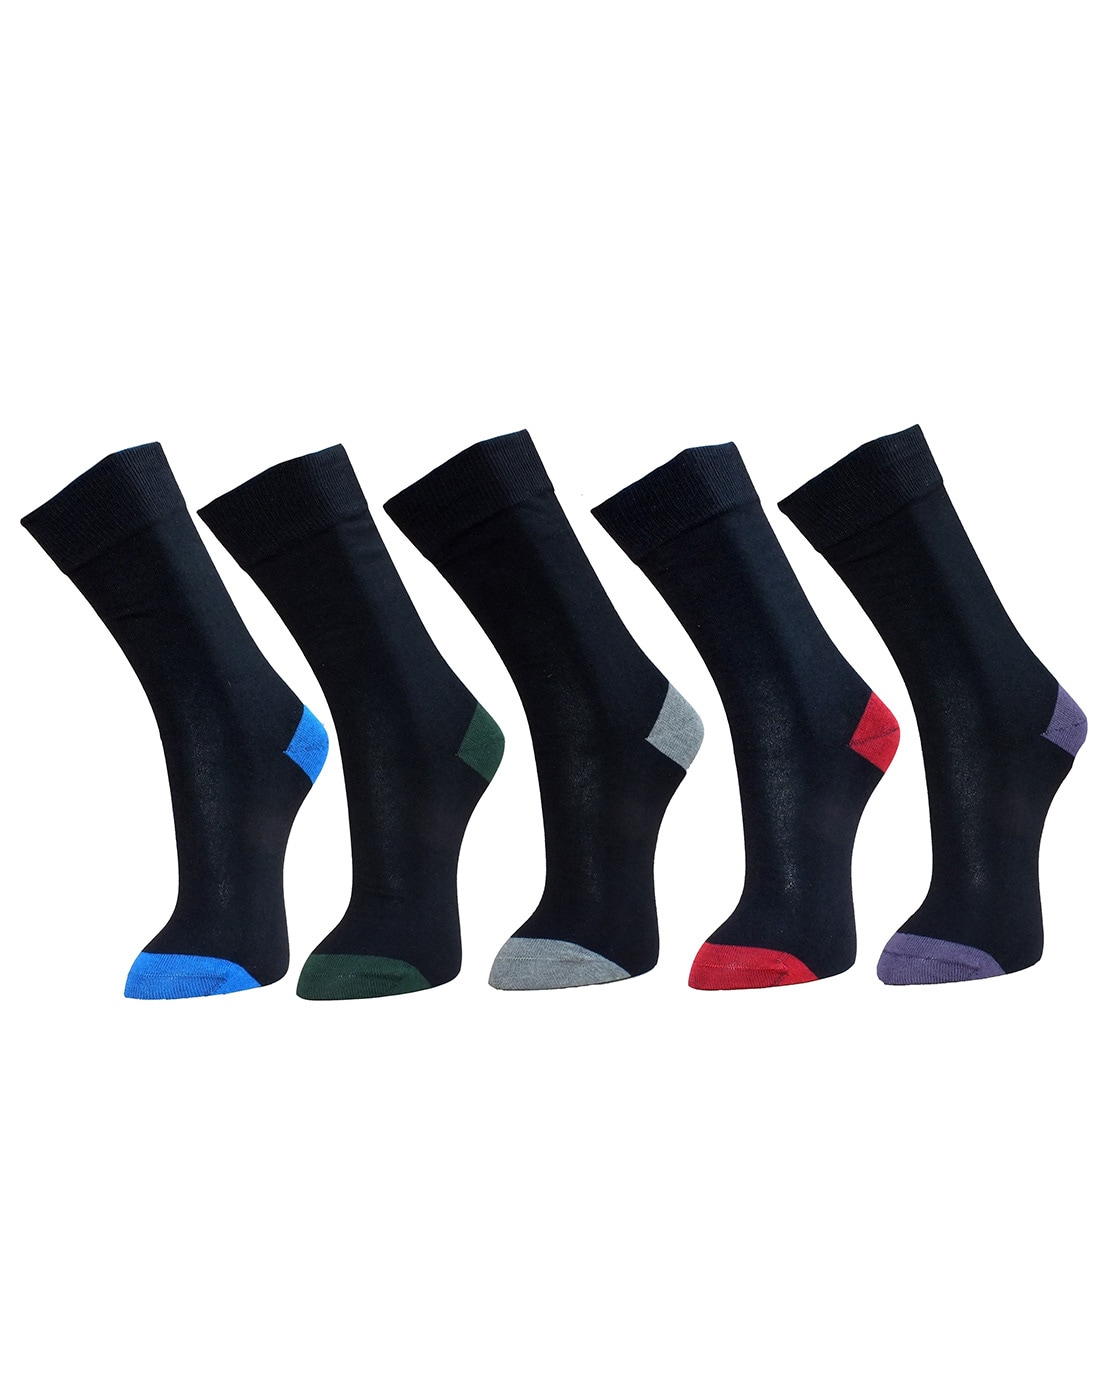 black cotton socks with colourful heel toe